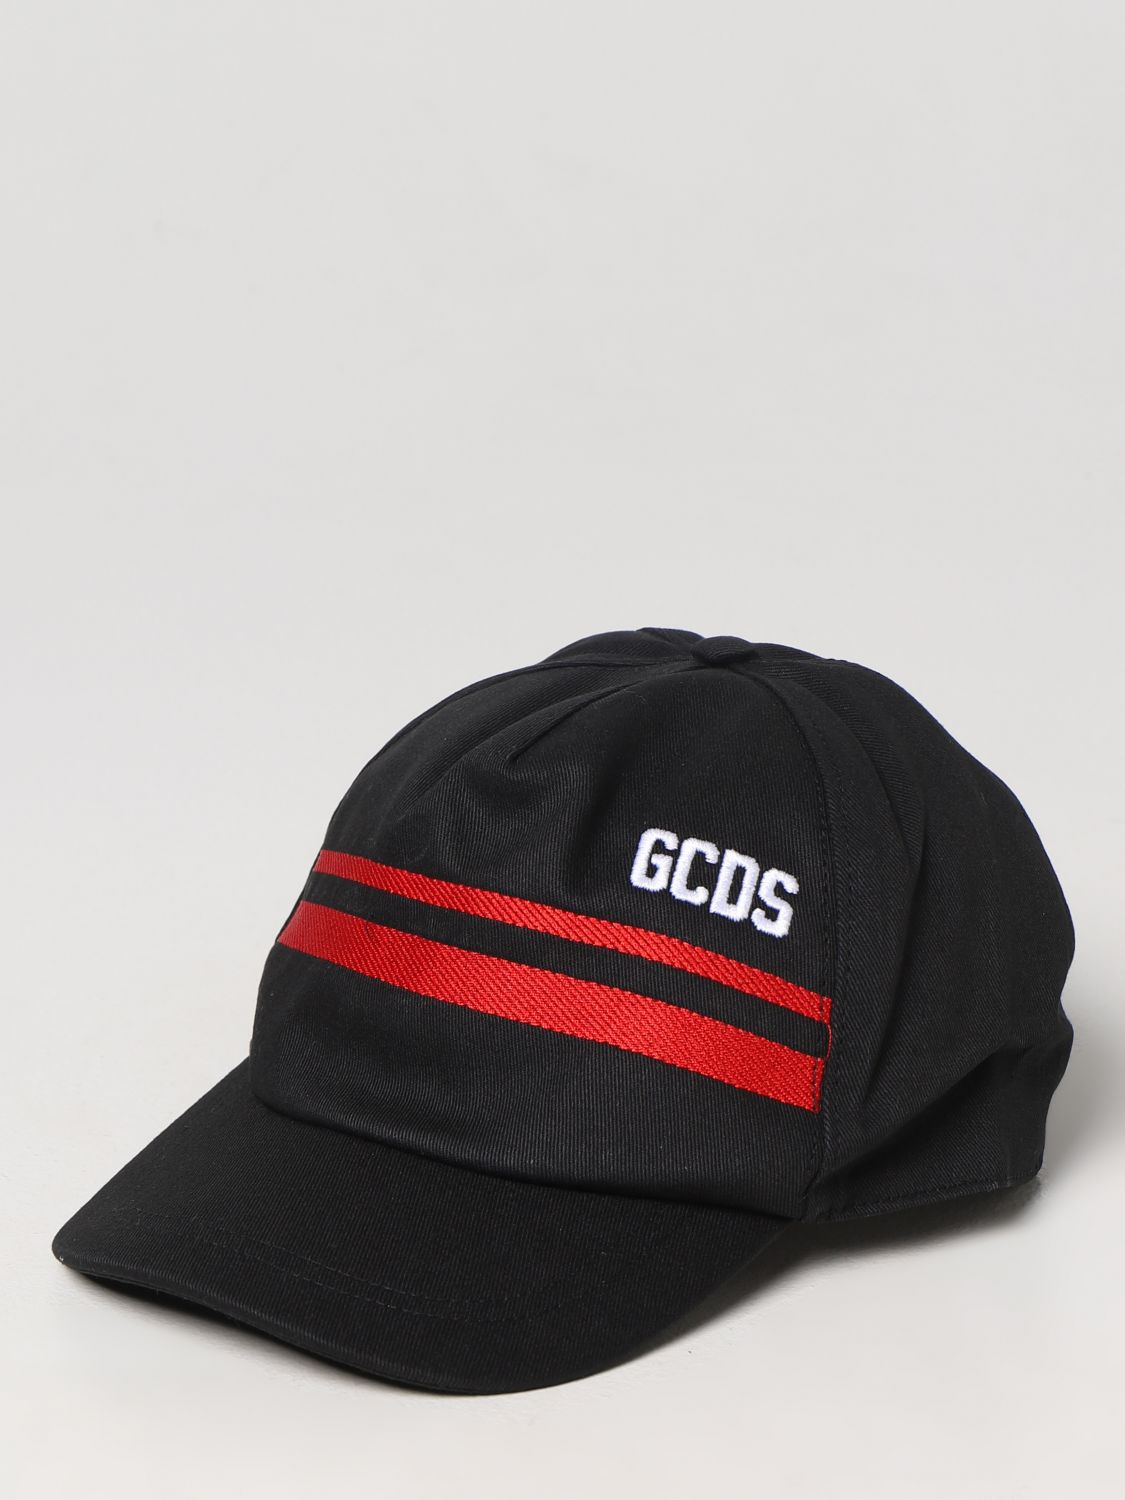 Gcds Girls' Hats  Kids Kids Color Black